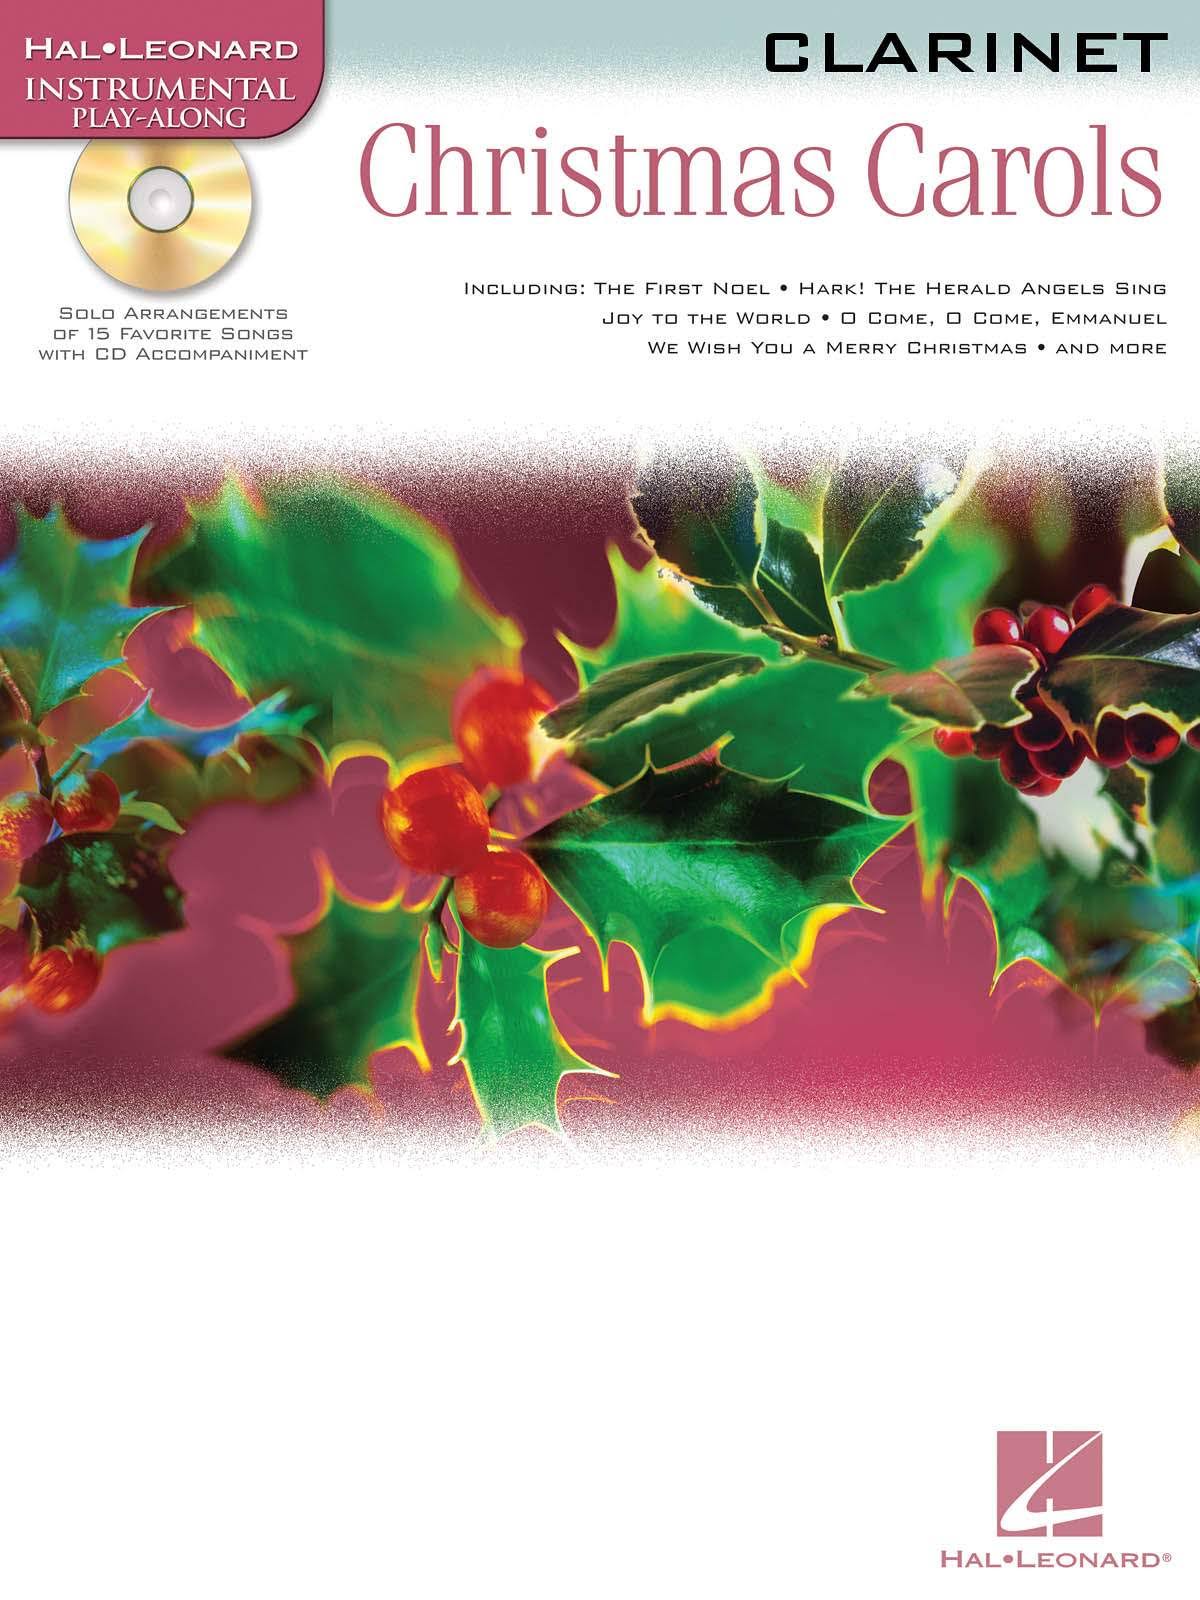 Hal Leonard Christmas Carols for Clarinet Book and CD